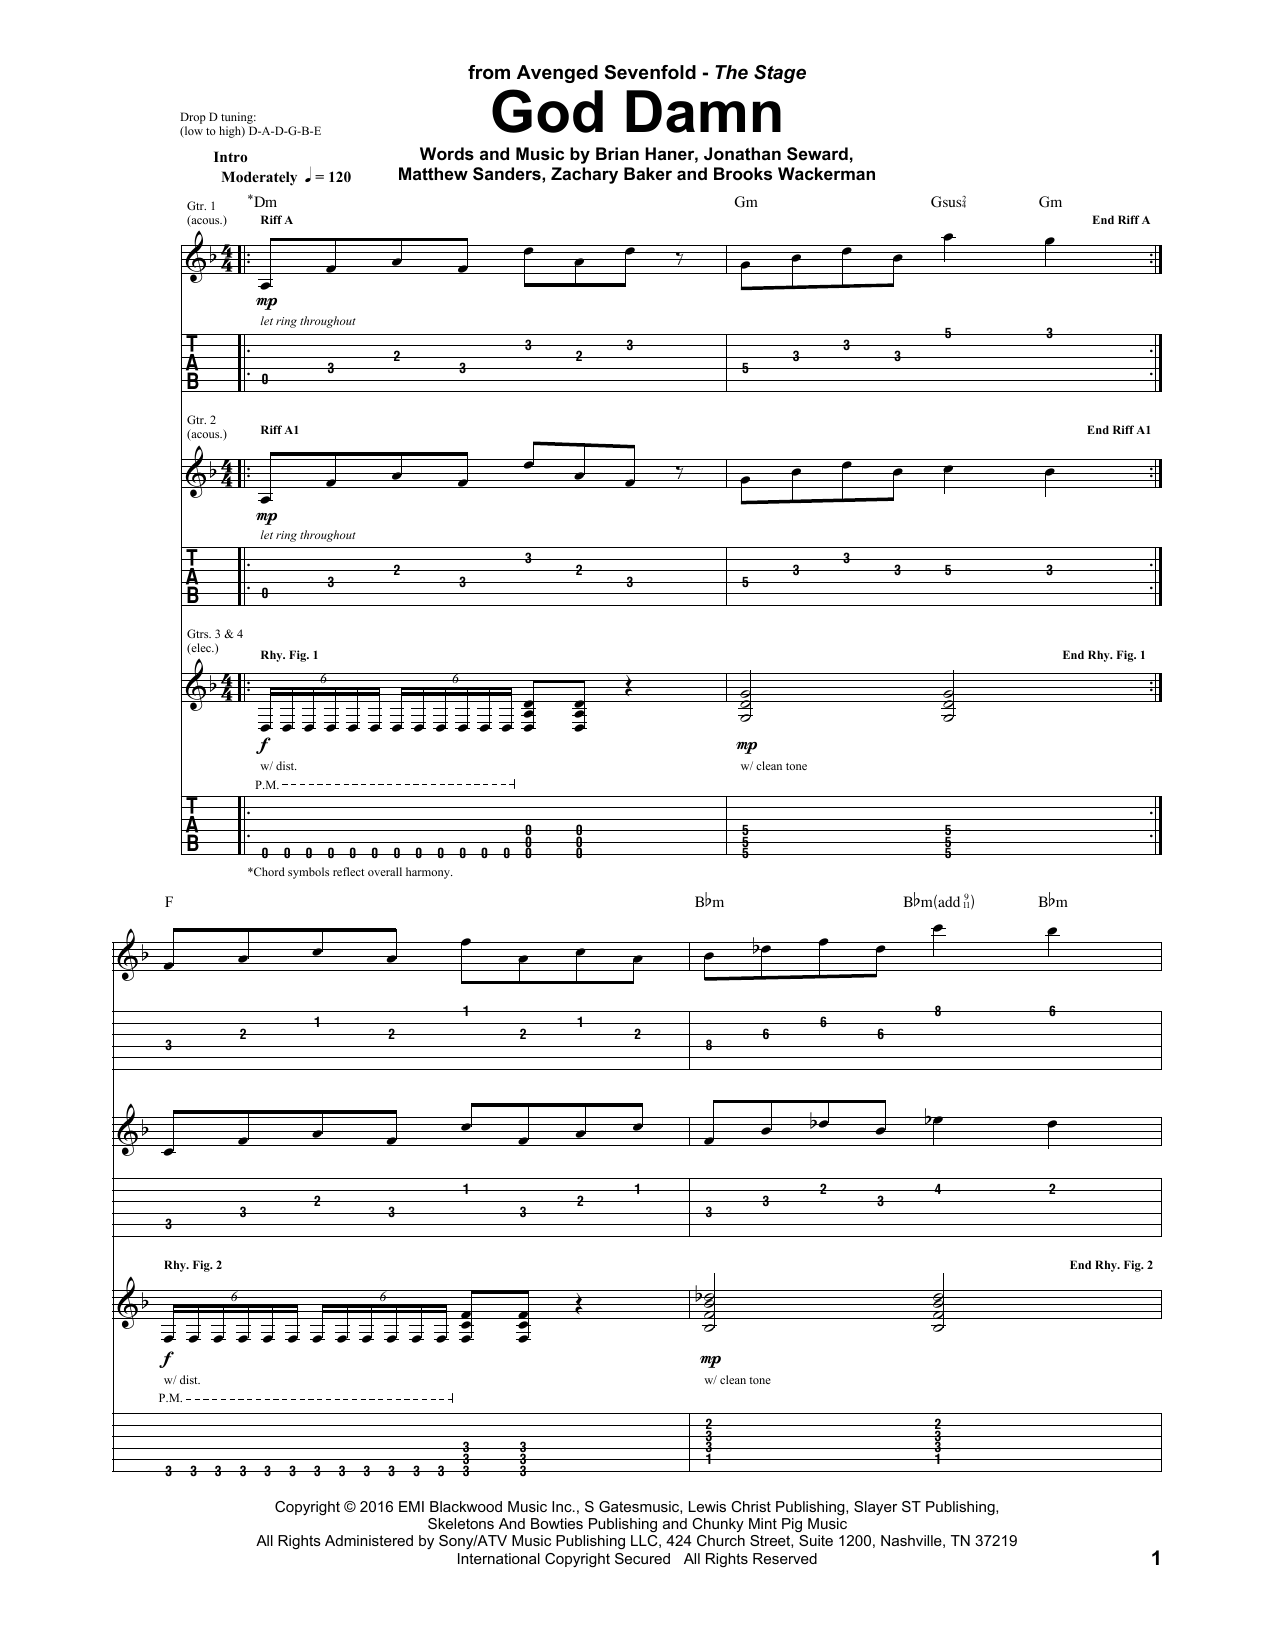 Avenged Sevenfold God Damn Sheet Music Notes & Chords for Guitar Tab - Download or Print PDF